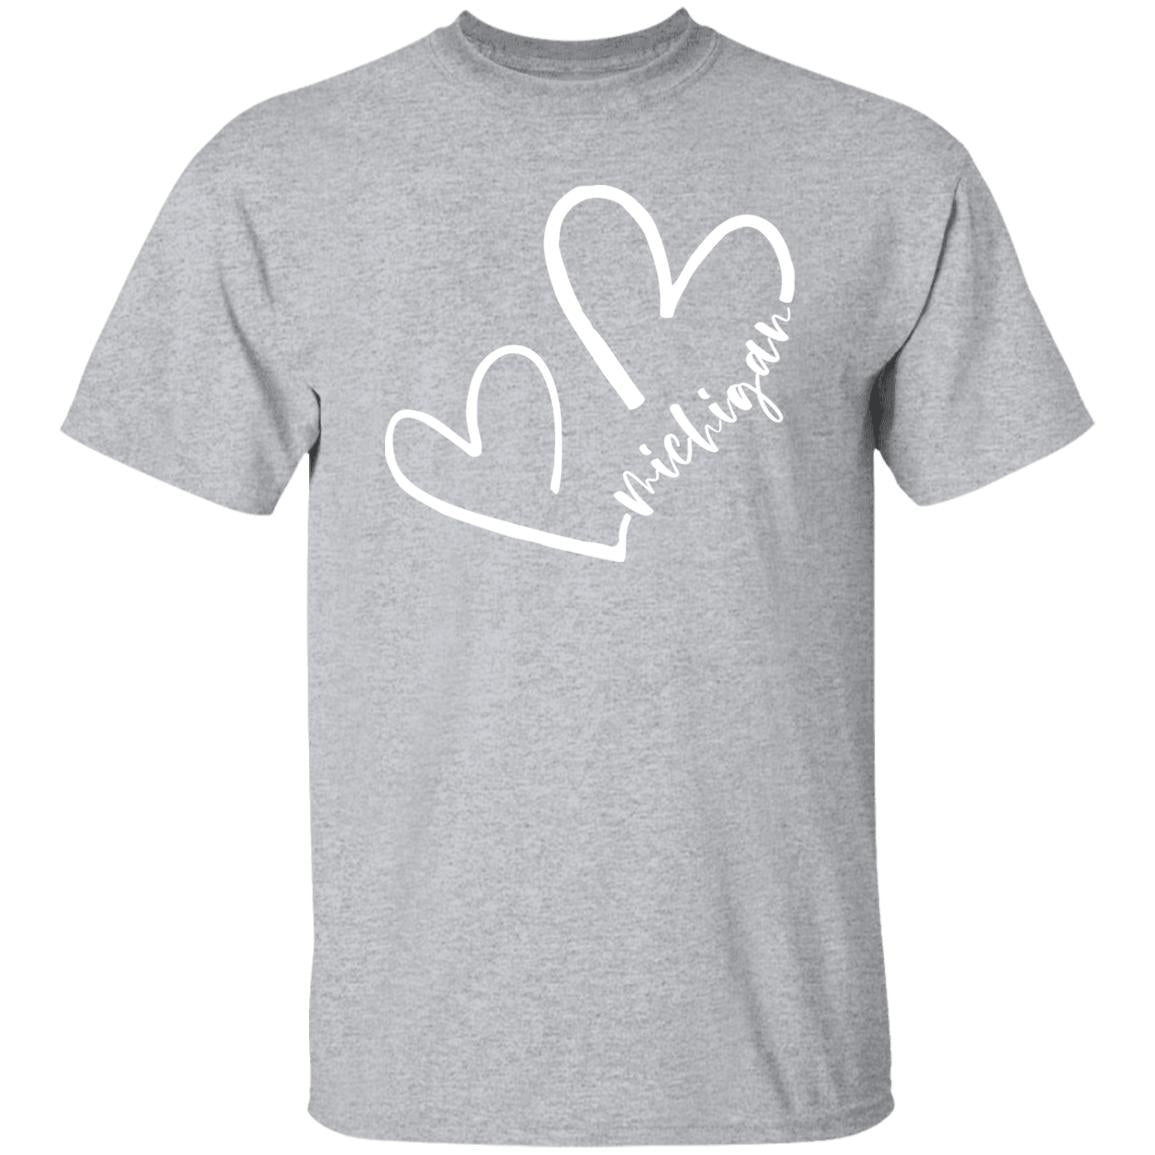 Michigan Hearts - White G500 5.3 oz. T-Shirt